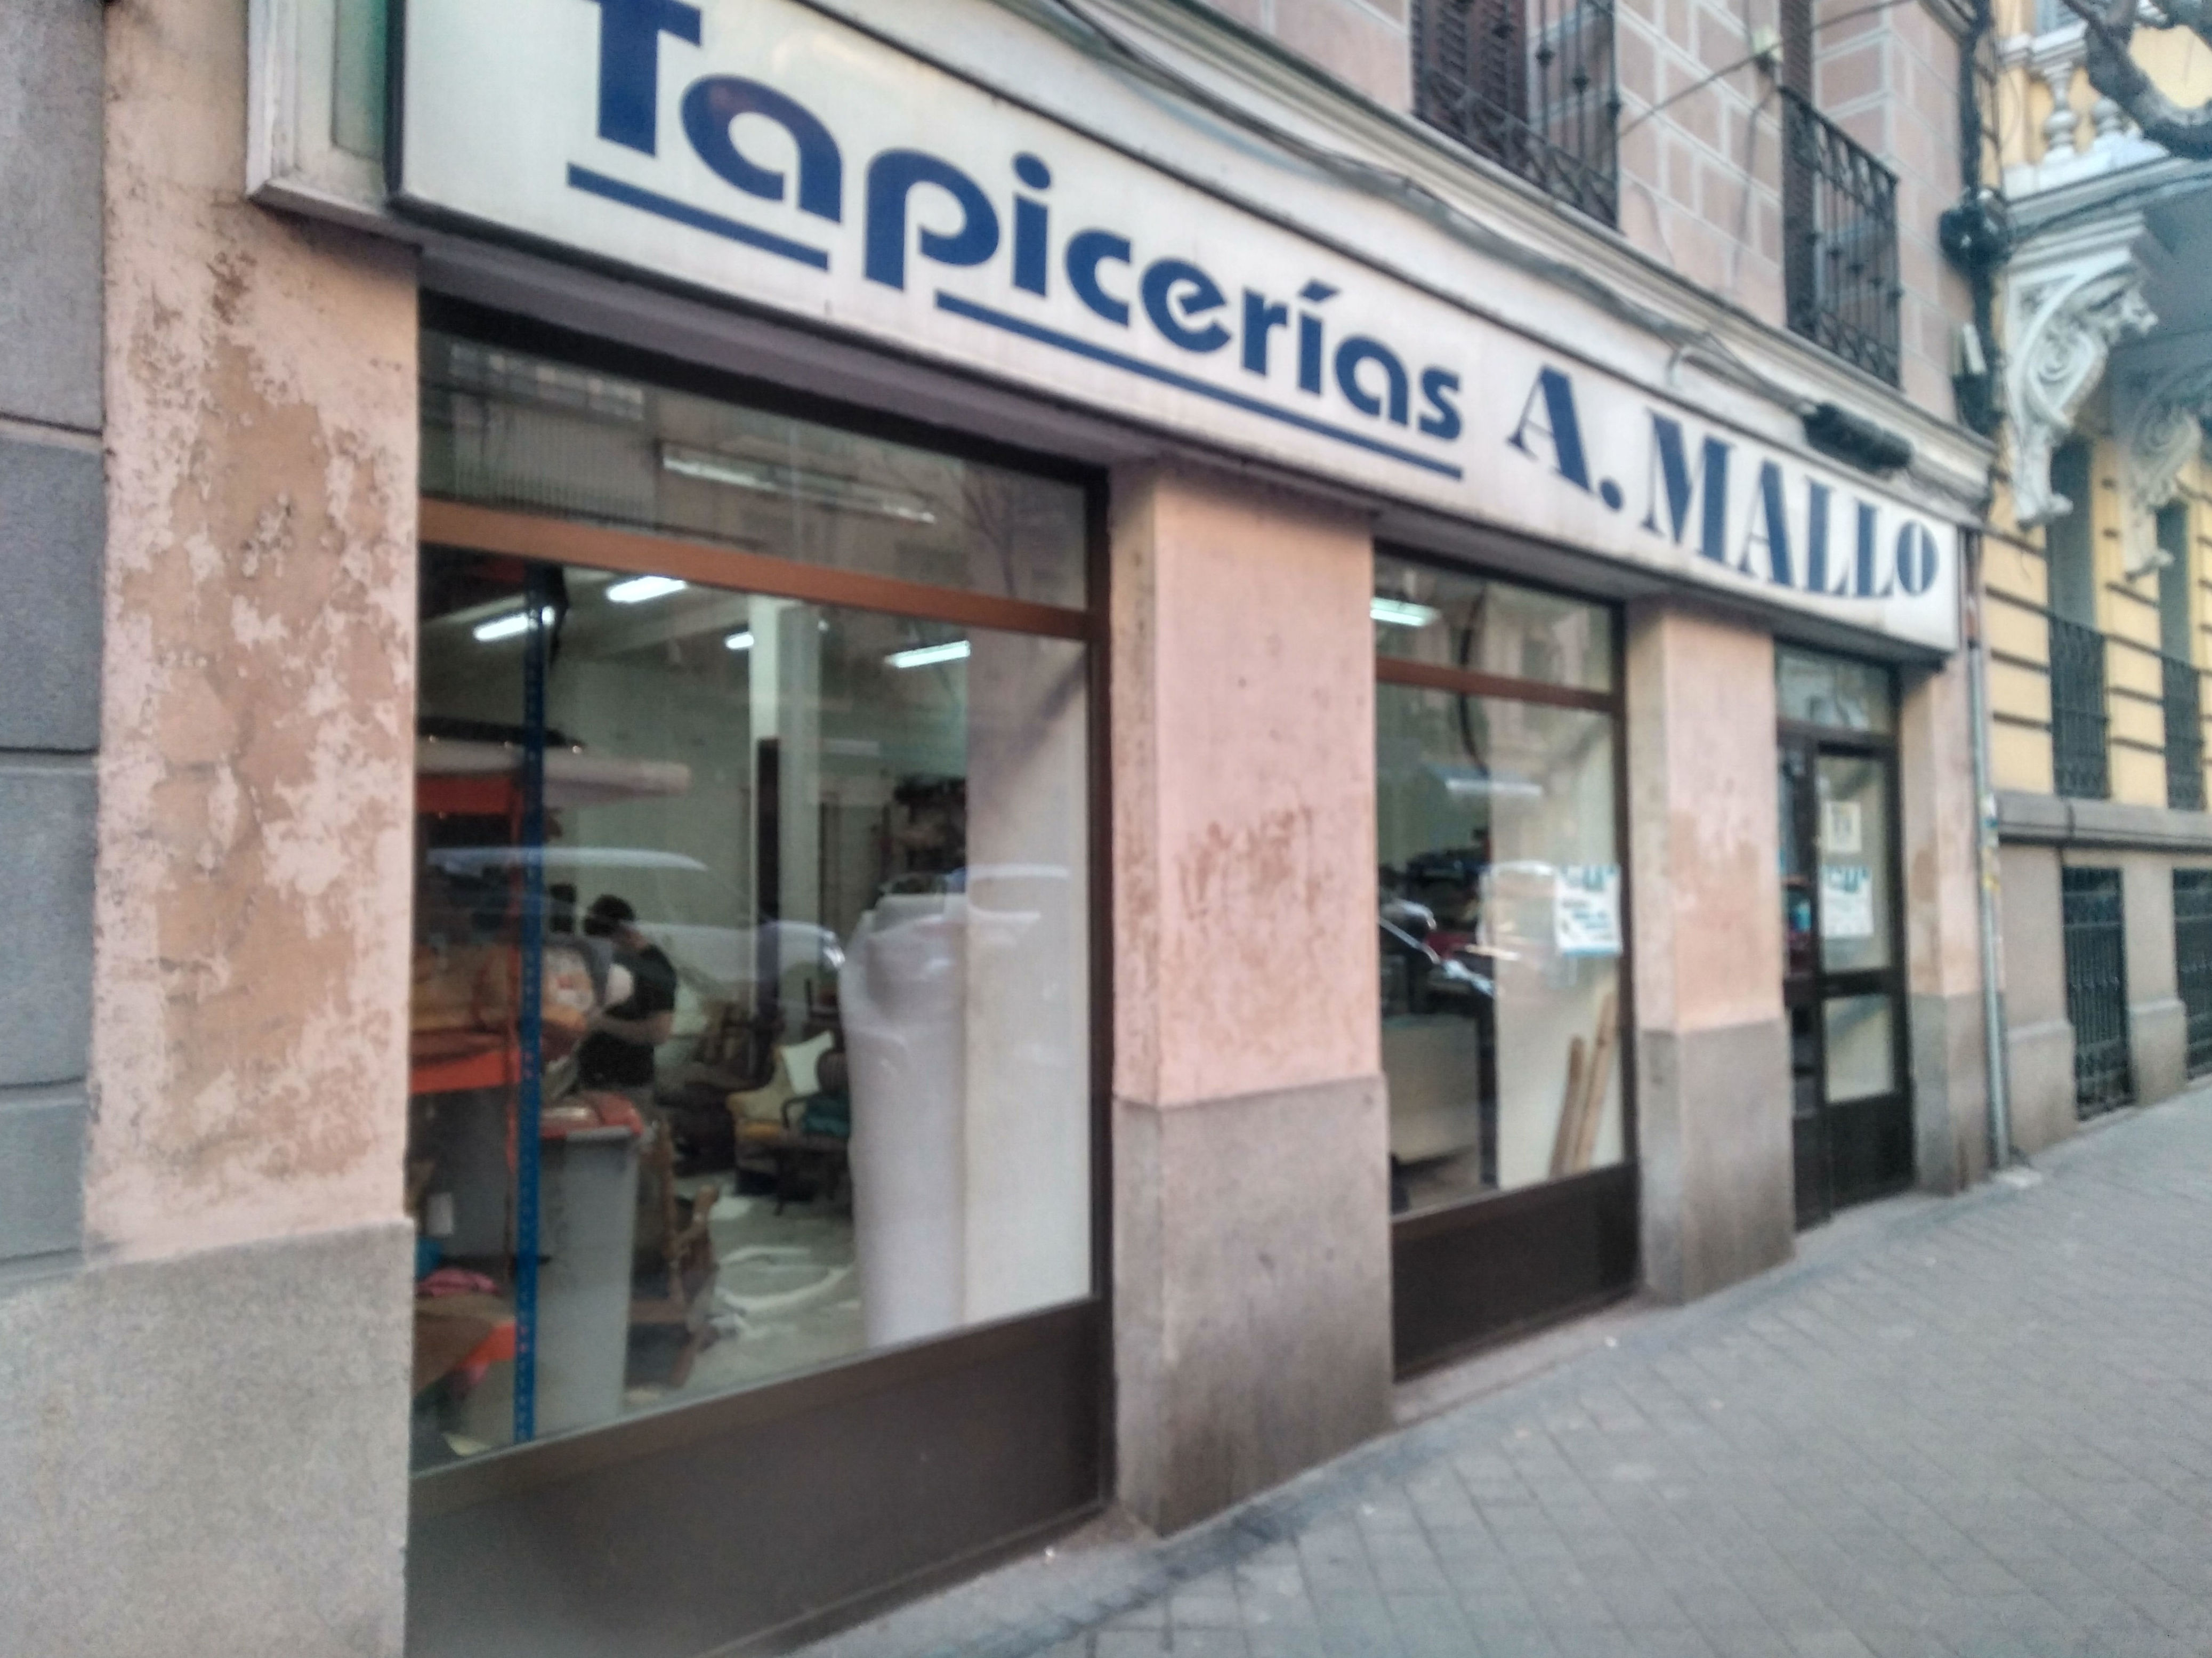 Tapicería A. Mallo Madrid